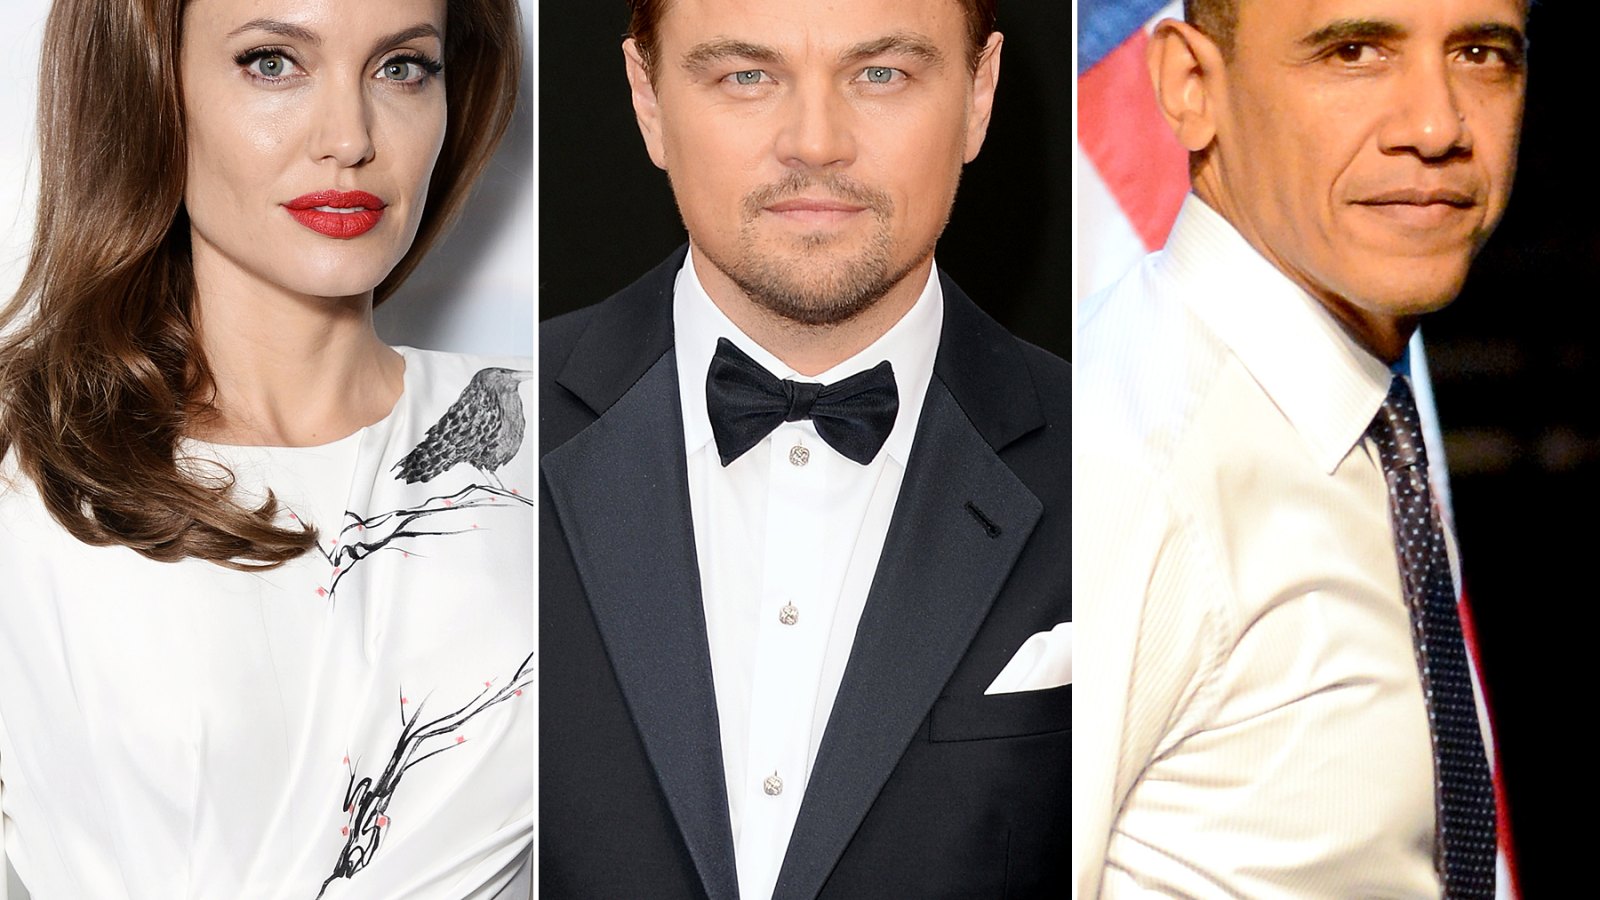 Angelina Jolie, Leonardo DiCaprio and President Barack Obama